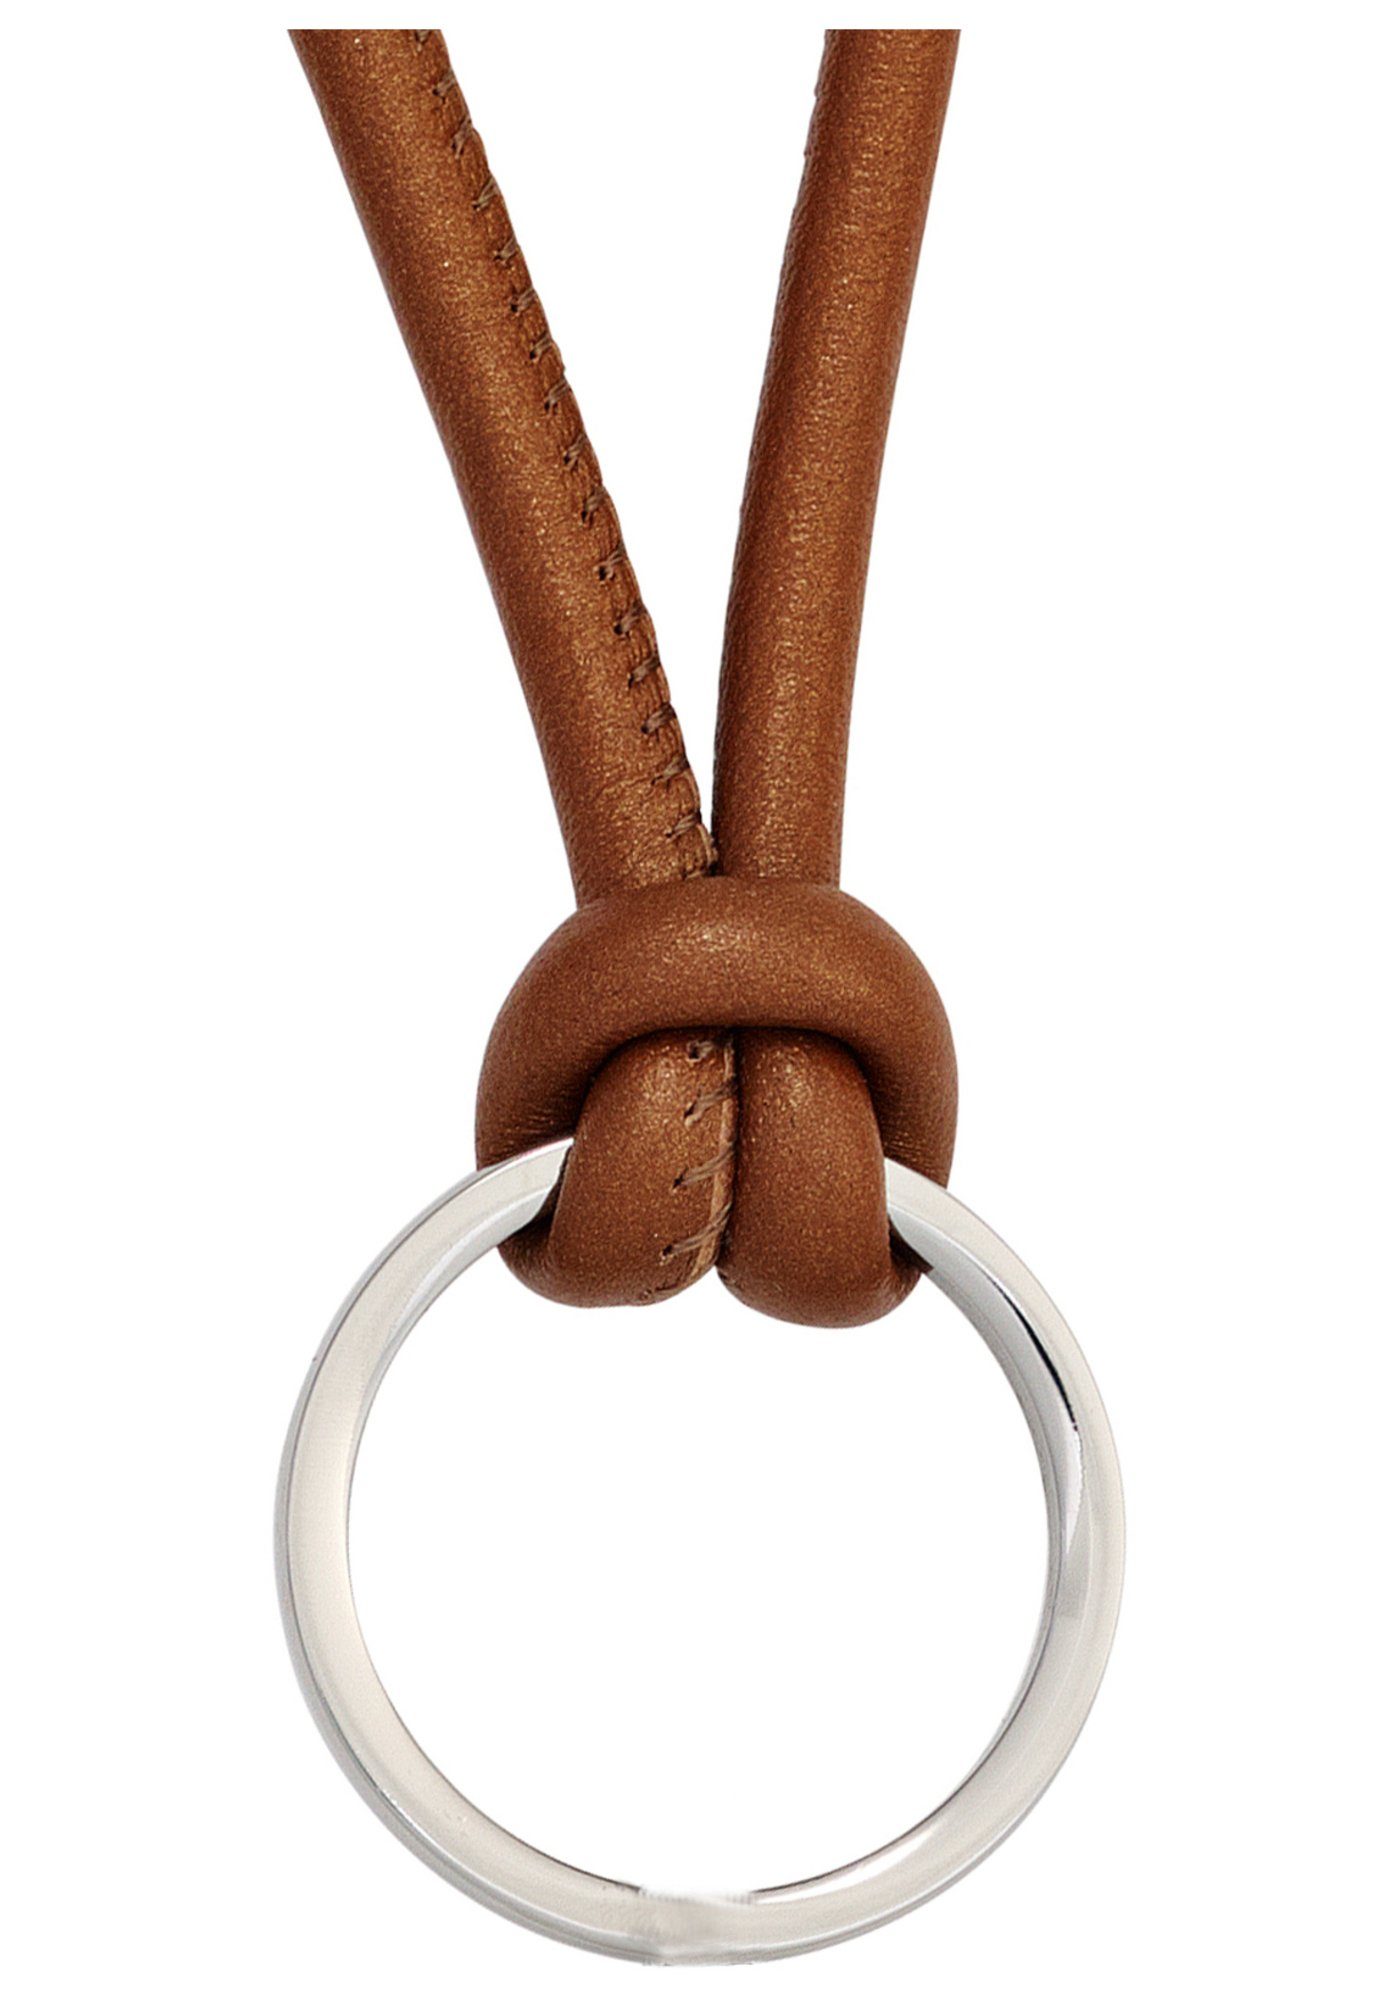 JOBO Kette ohne Anhänger, Leder und Edelstahl 45 cm, Hochwertige Halskette